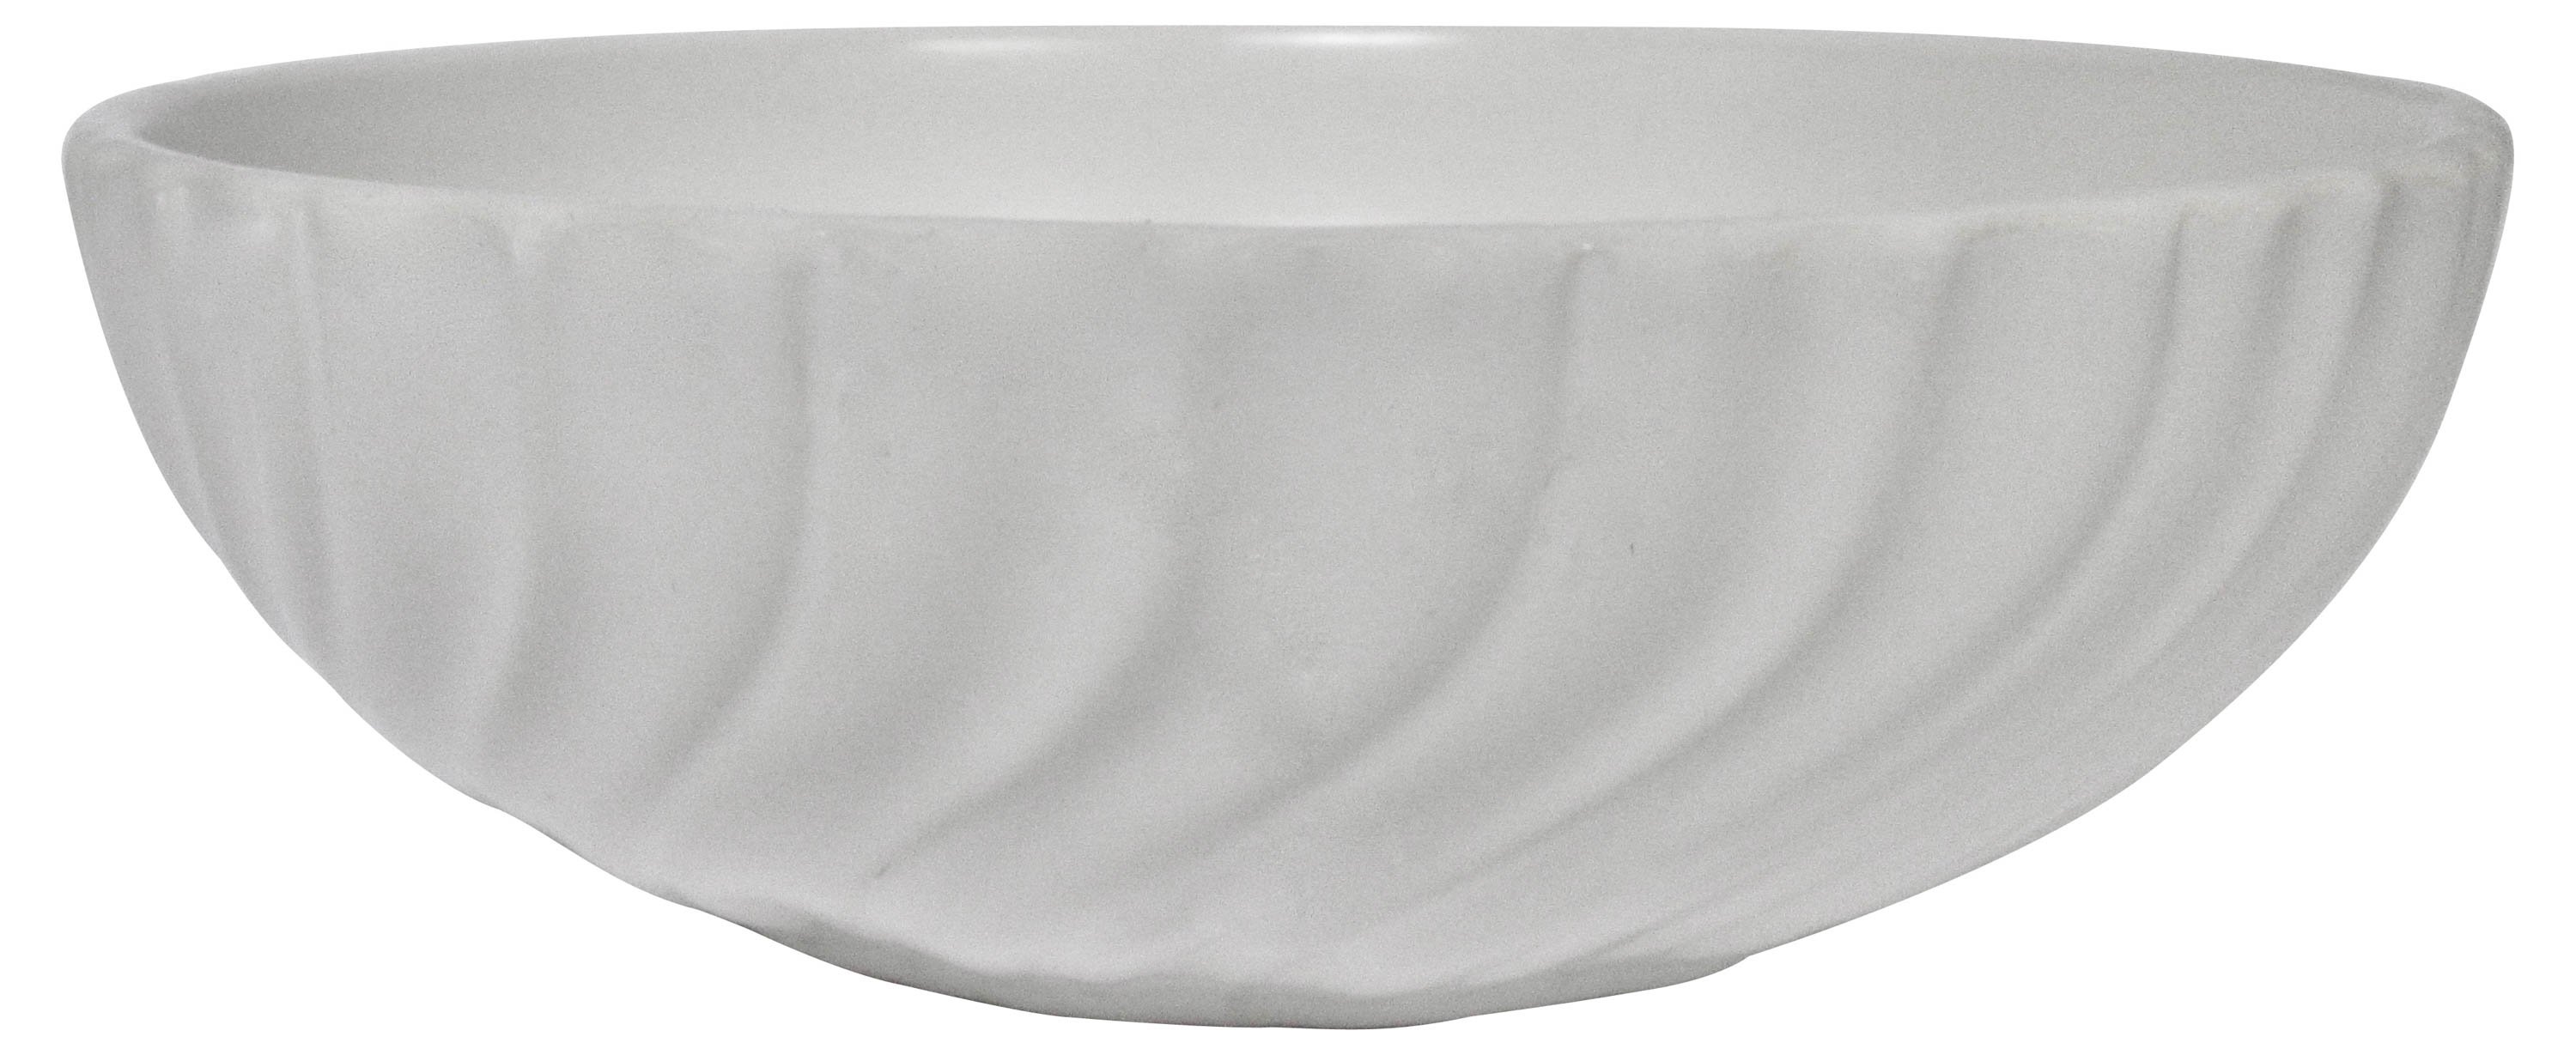 1940s California Pottery Bowl~P77619379